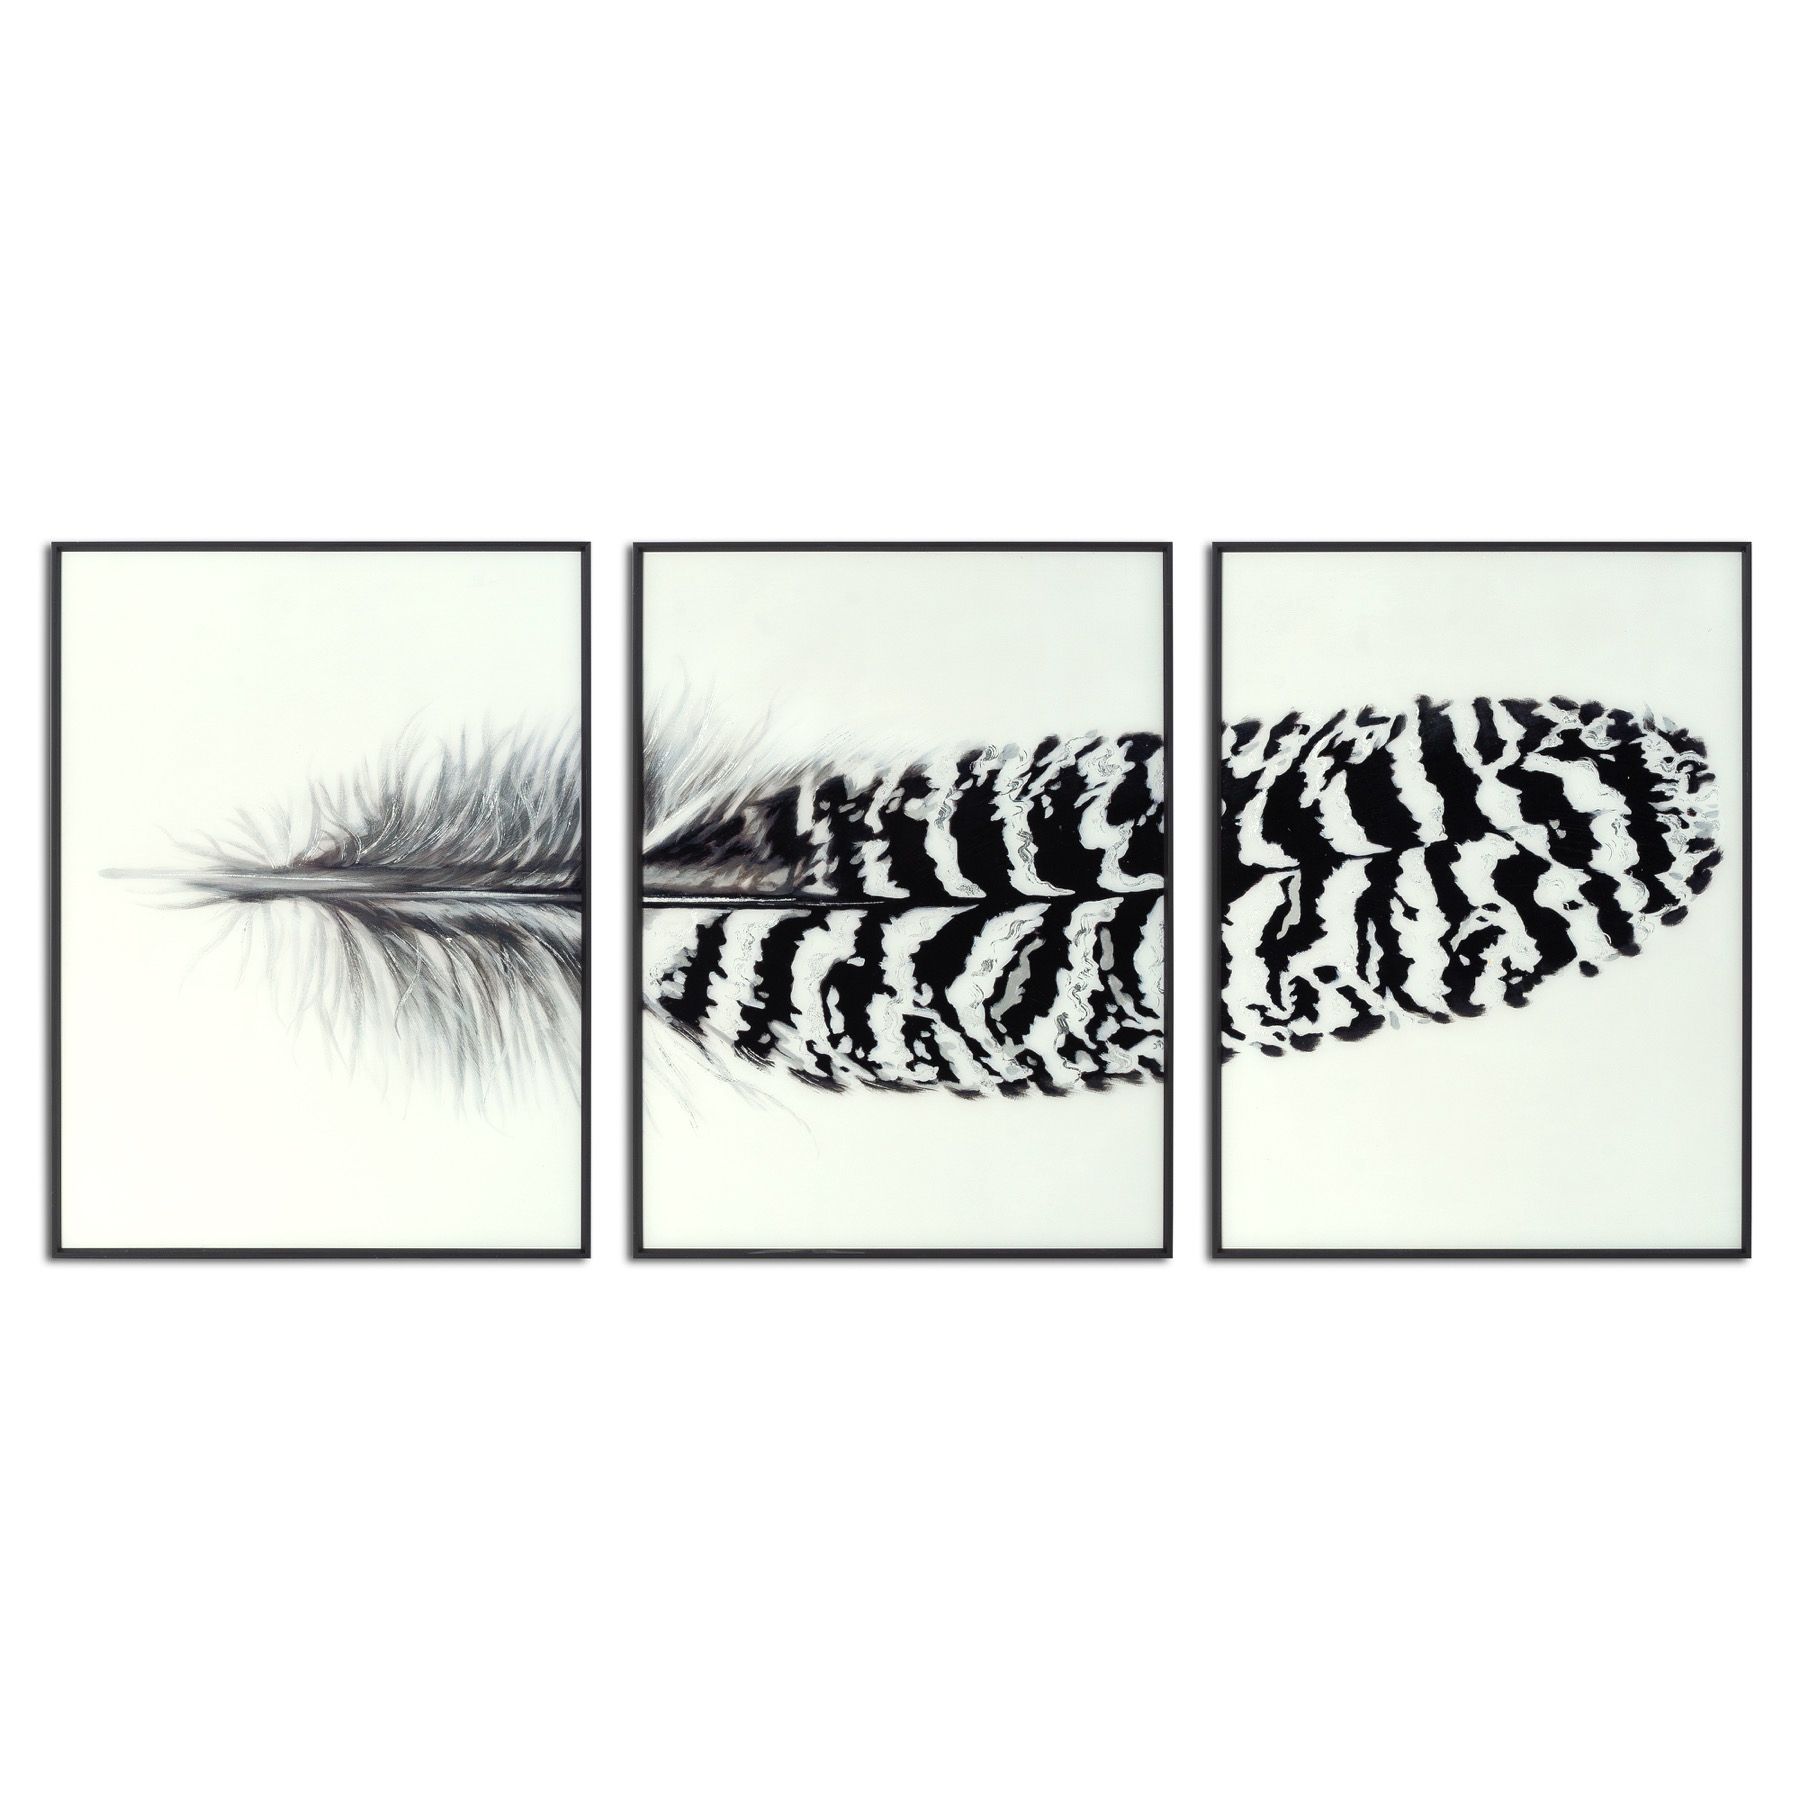 Black Striped Feather Over 3 Black Glass Frames - Image 1